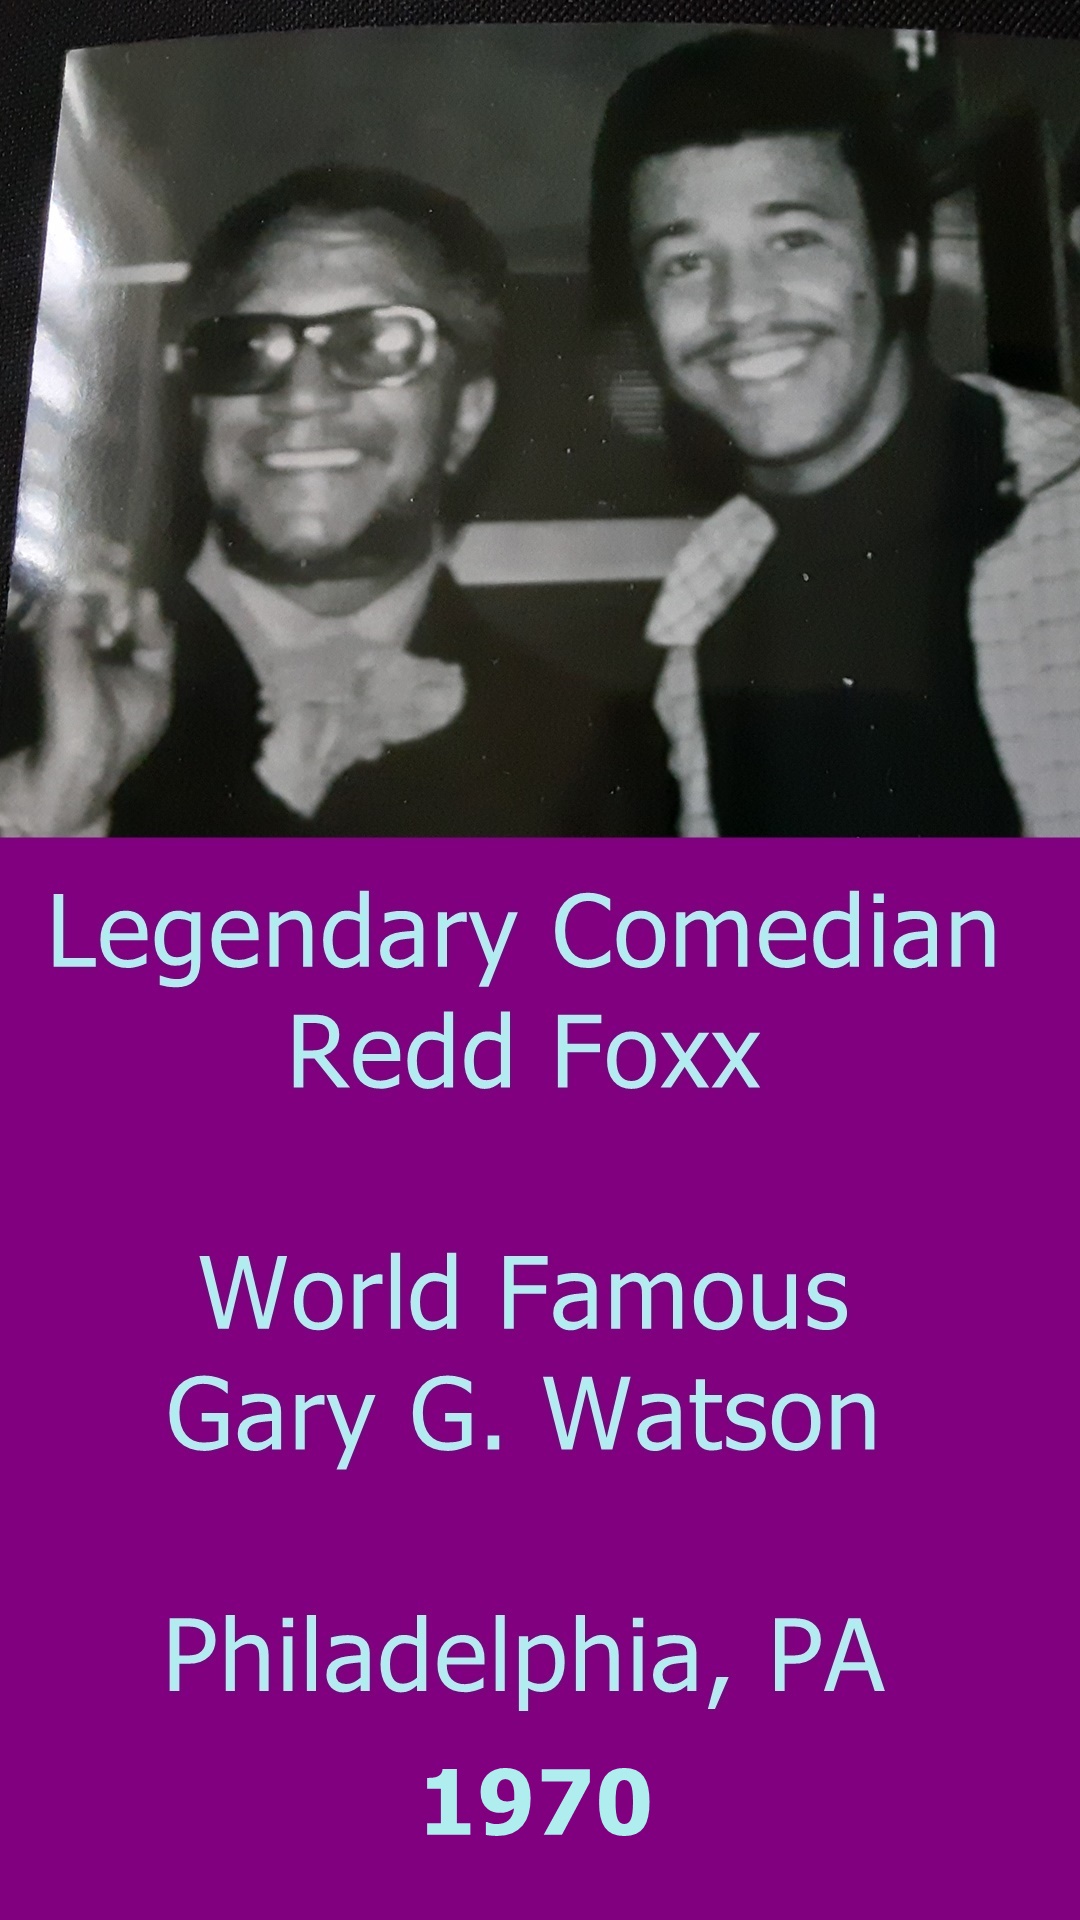 Redd Foxx and Gary Watson